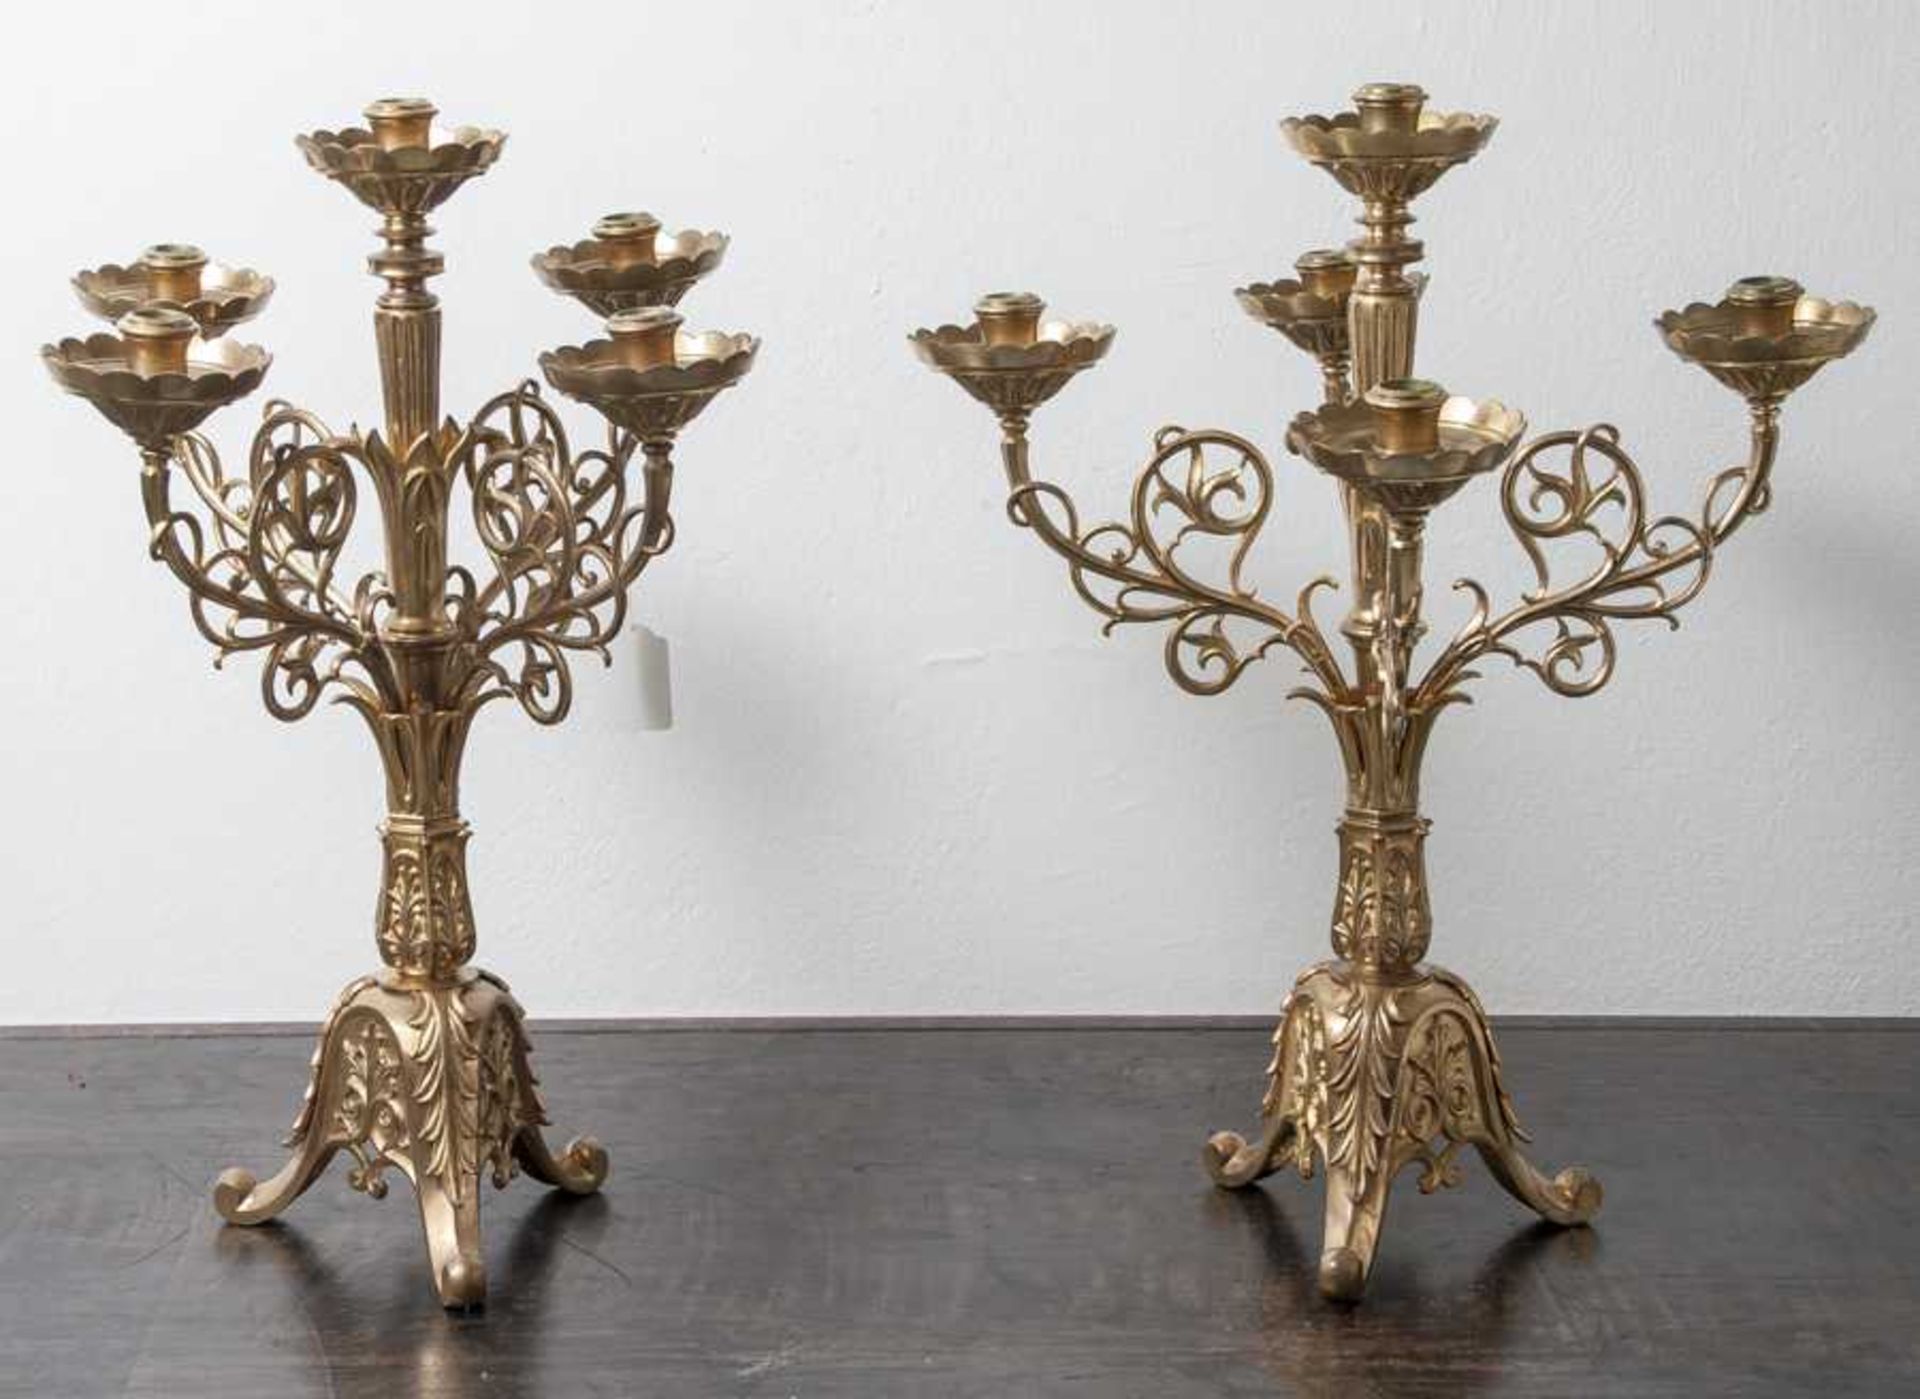 Zwei gleiche Kerzenhalter, Historismus, 19. Jahrhundert,Pair of candleholders, bronce, Historism,